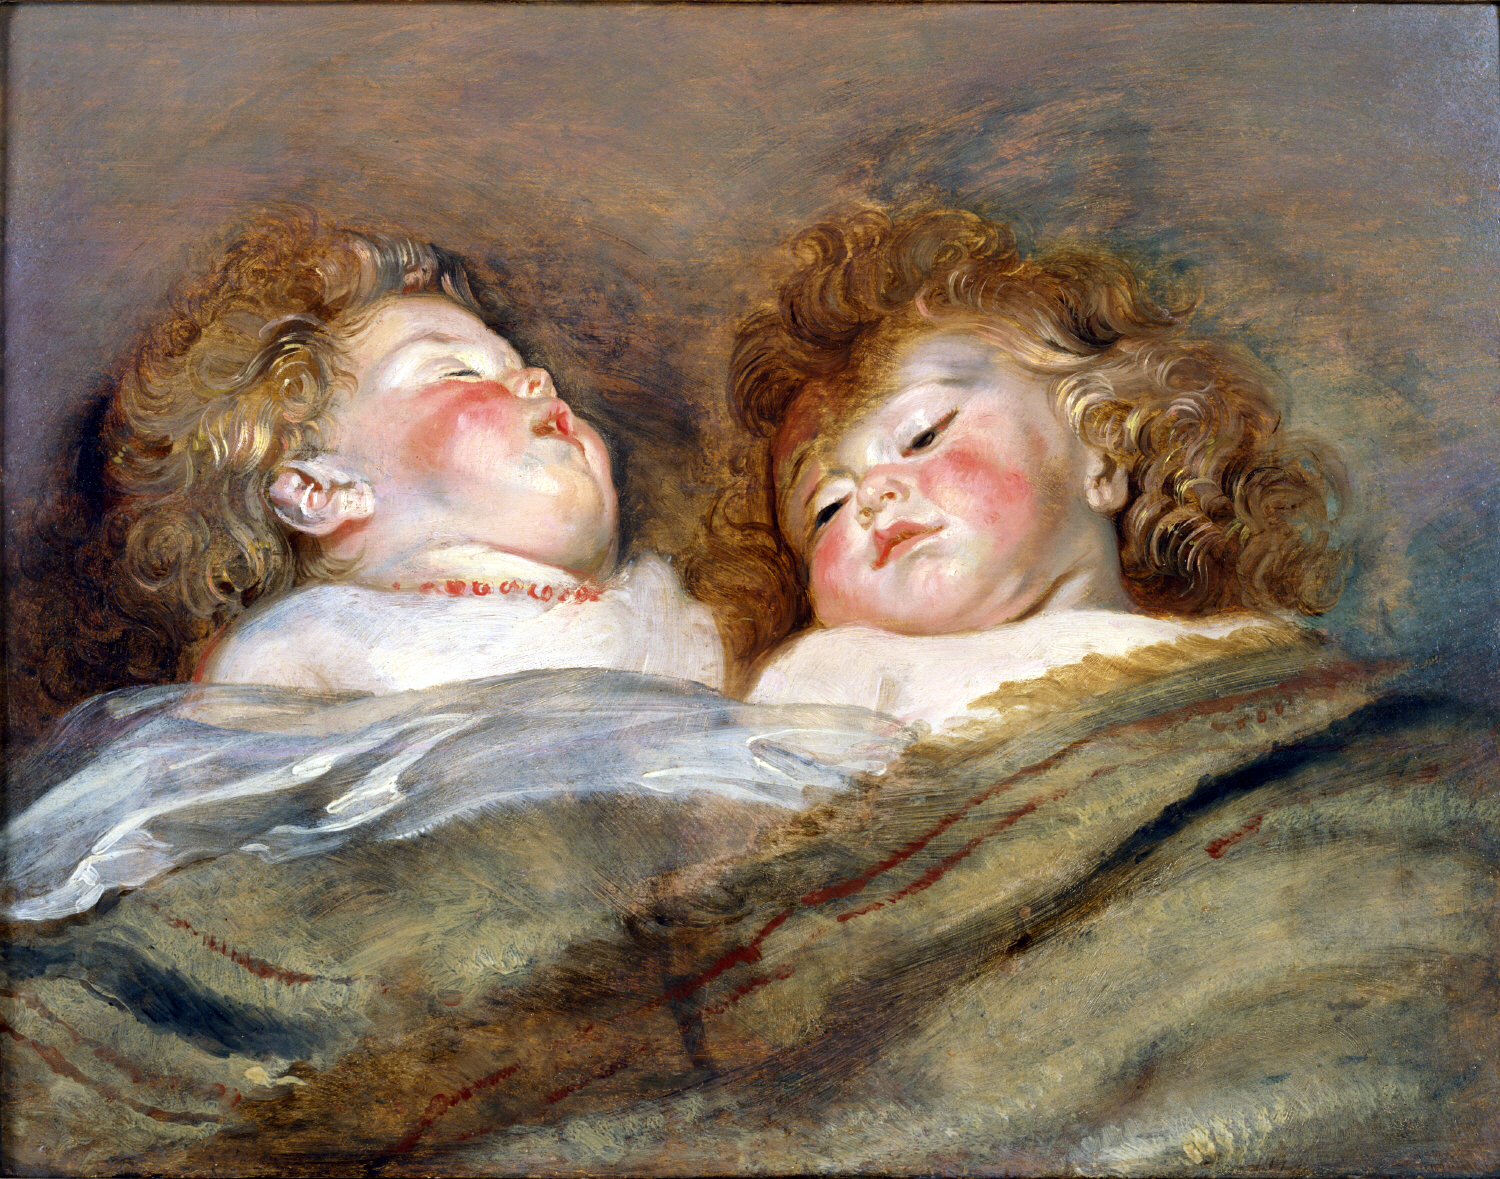 सोते हुए दो बच्चे by Peter Paul Rubens - १६१२ - १३ ई. - ५०.५ x ६५.५ से.मी. 